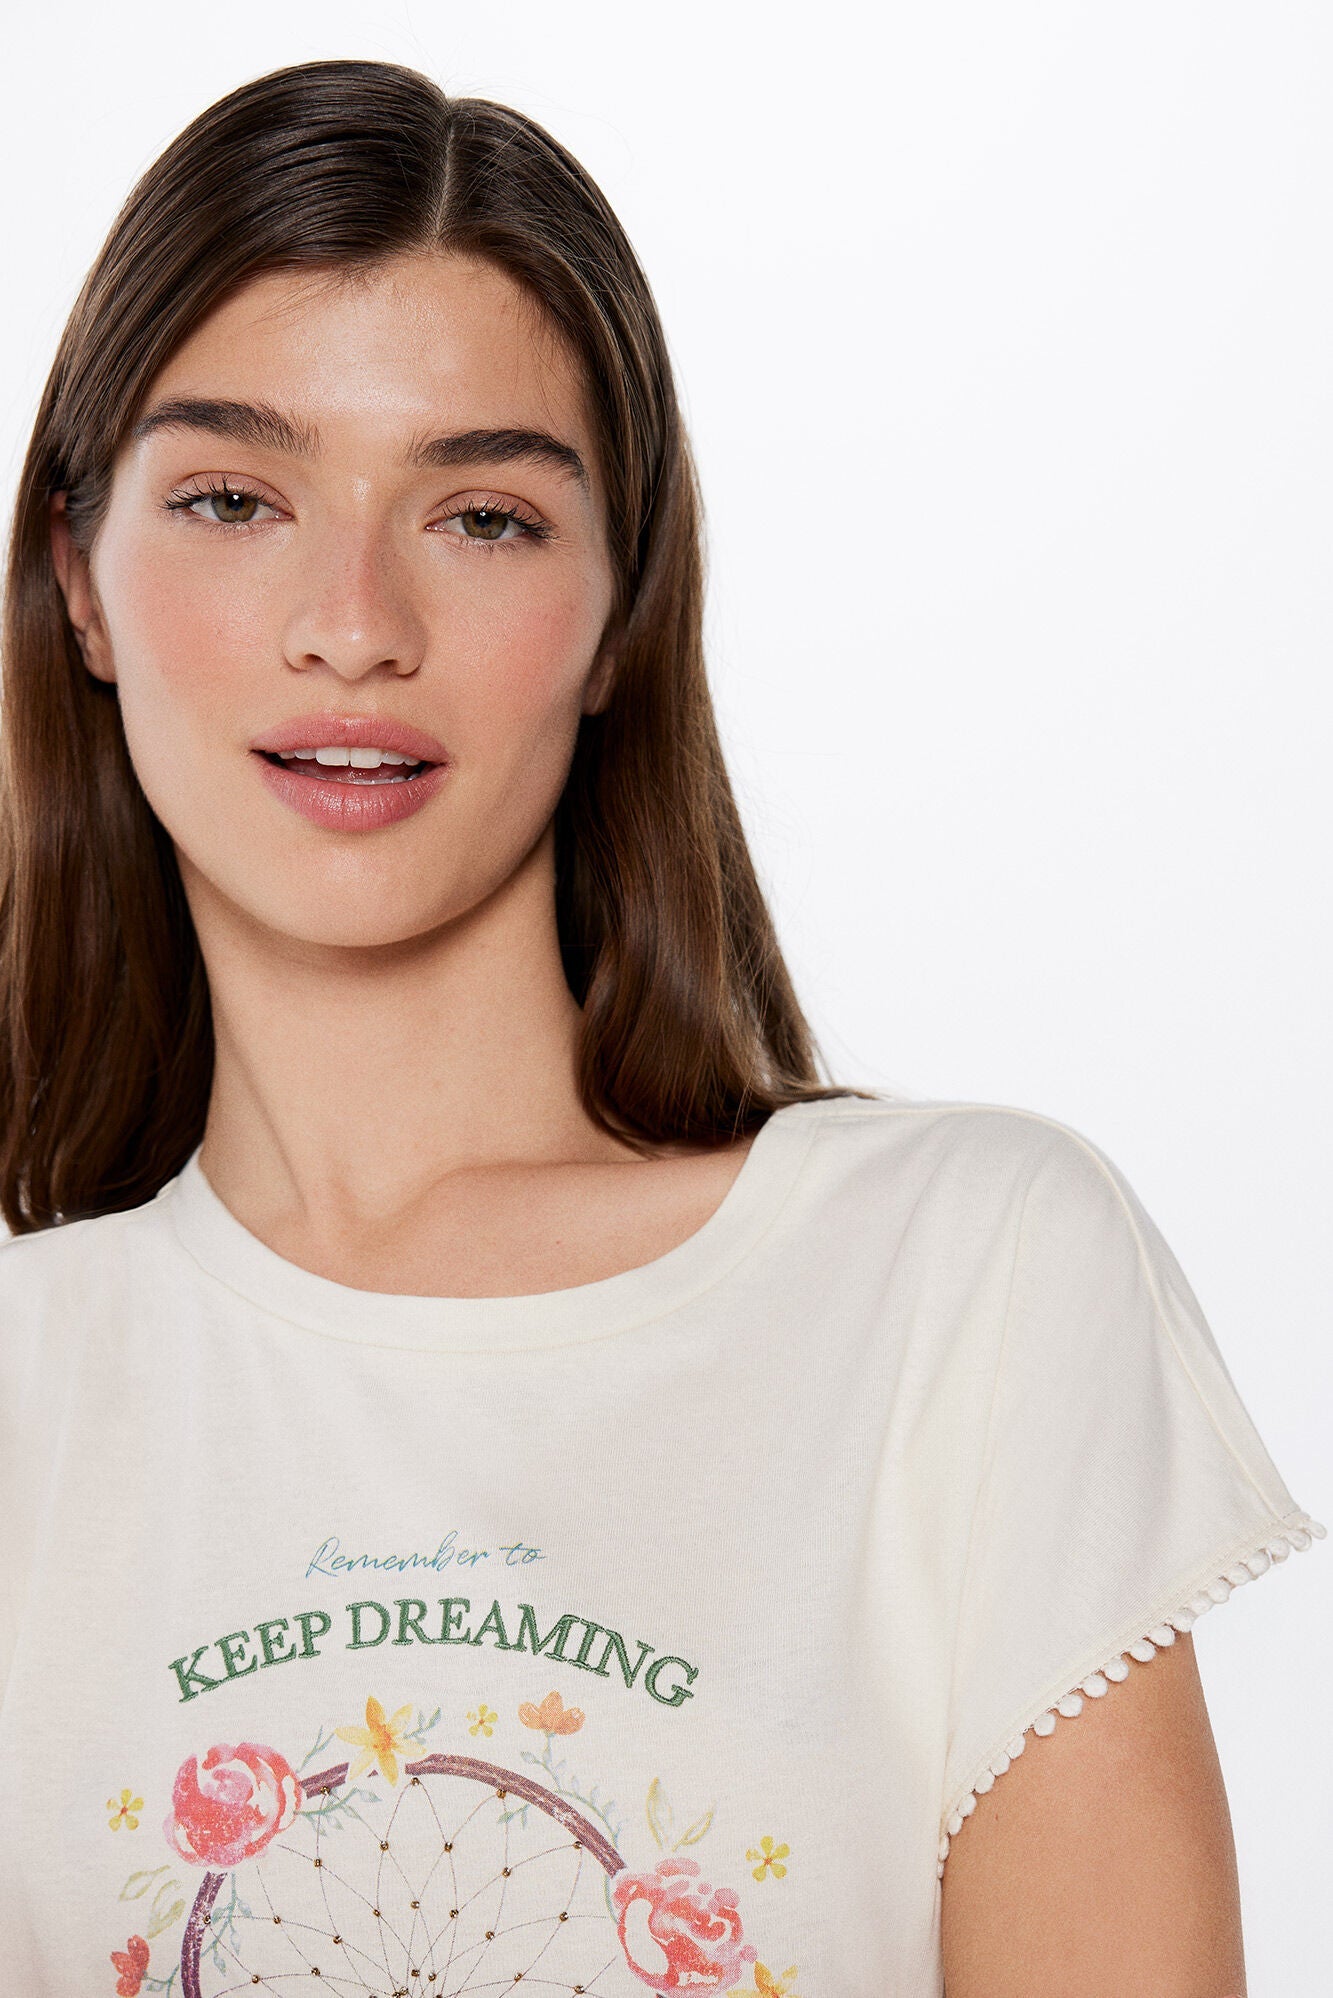 "Keep Dreaming" T-shirt